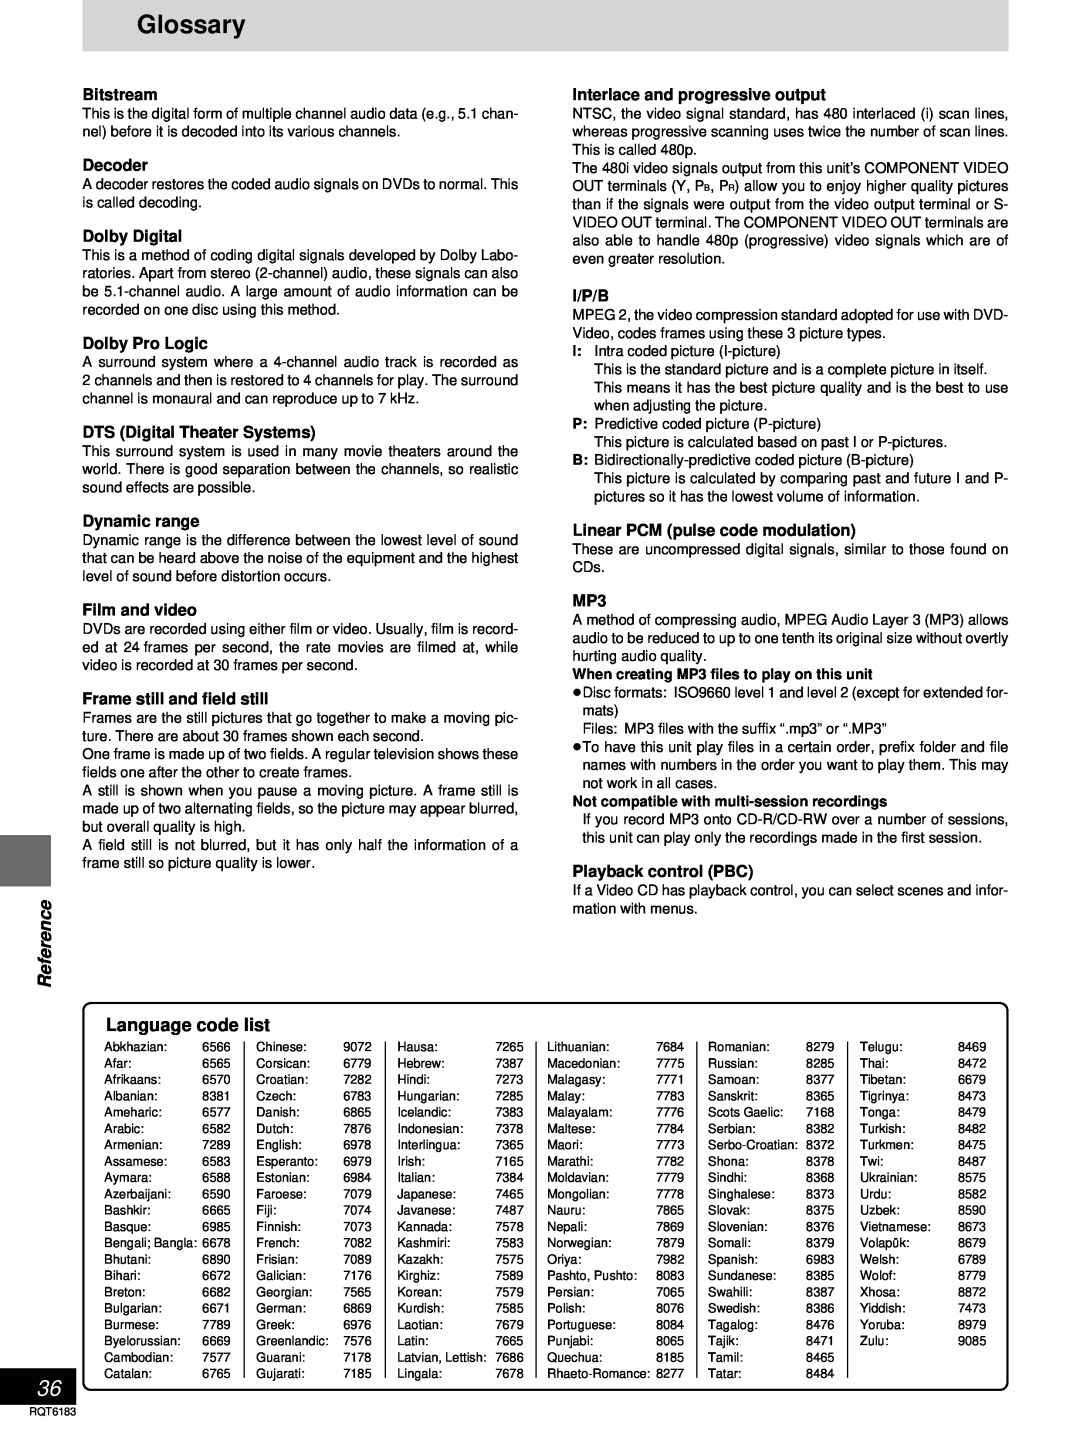 Panasonic SC-HT95, SC-HT75 warranty Glossary, Reference, Language code list 